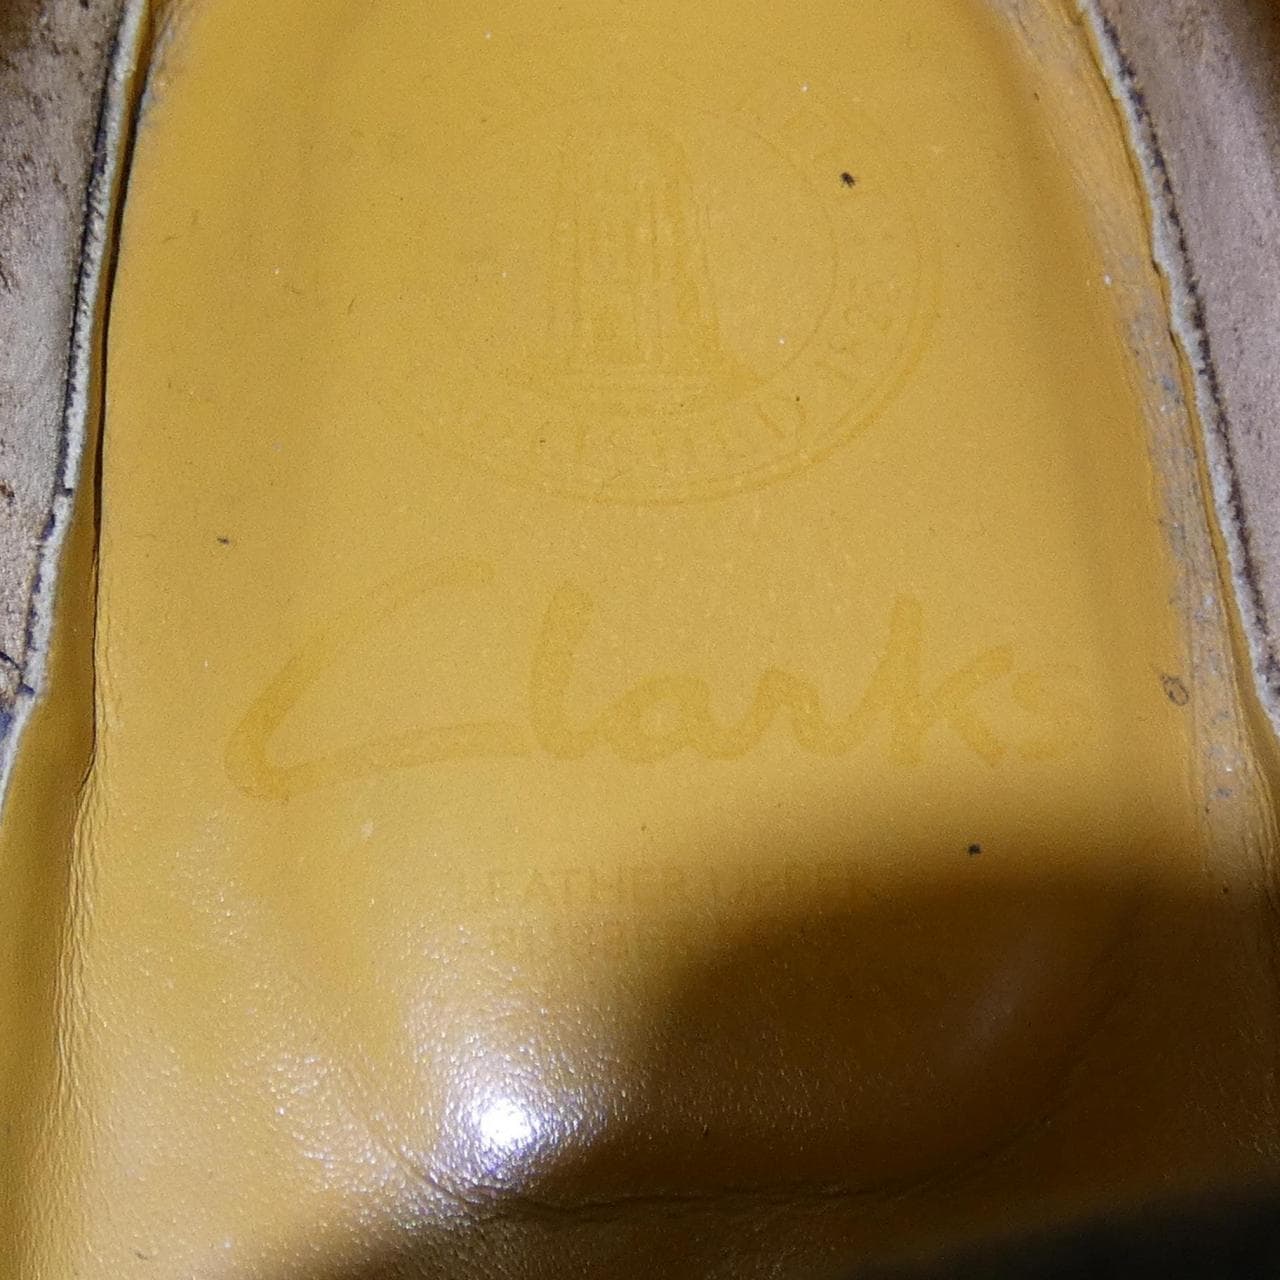 Clarks CLARKS shoes